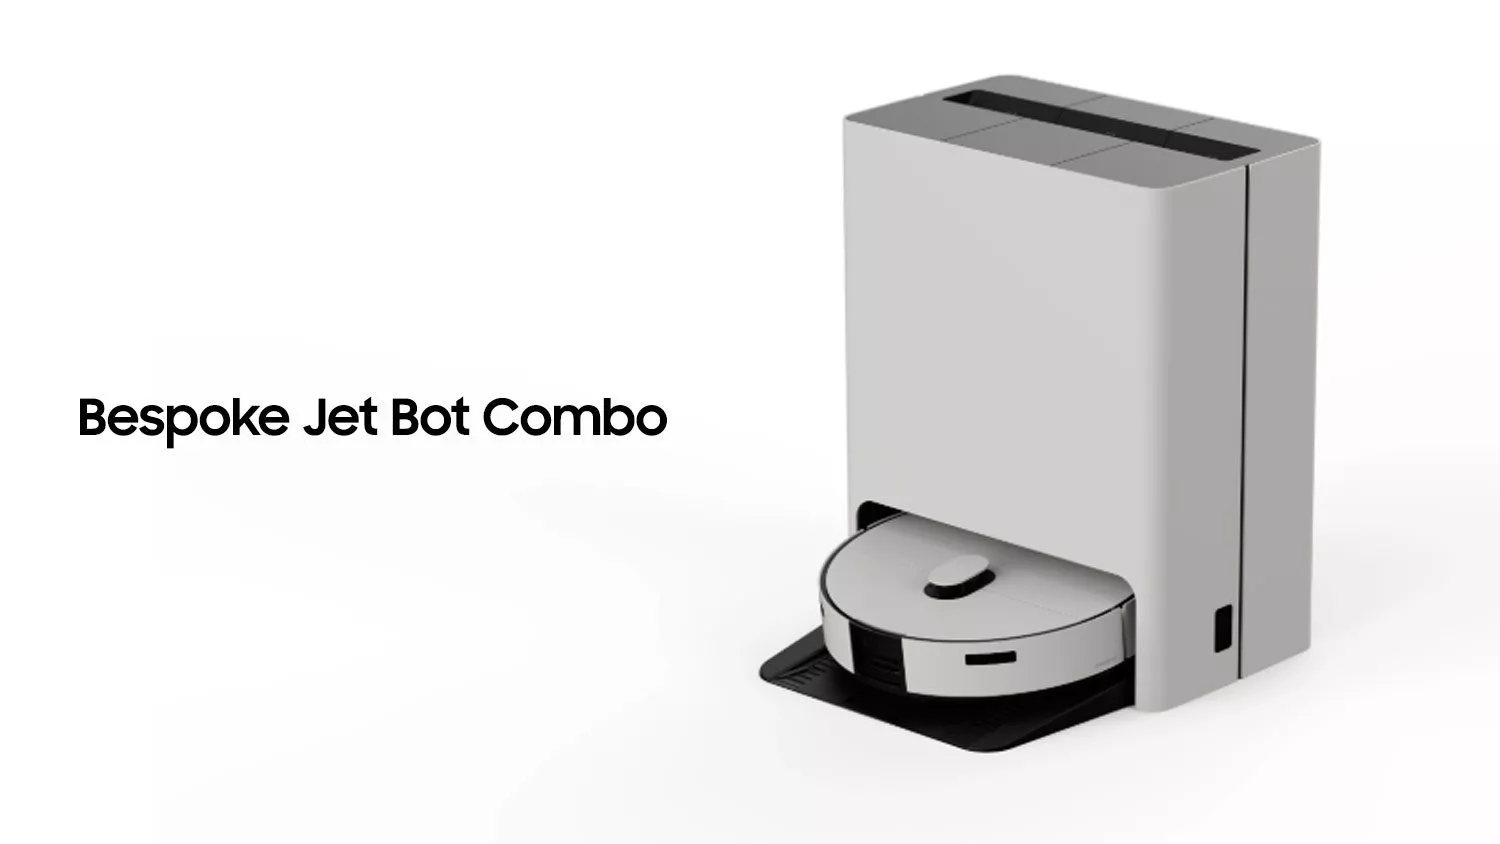 Samsung Bespoke Jet Bot Combo